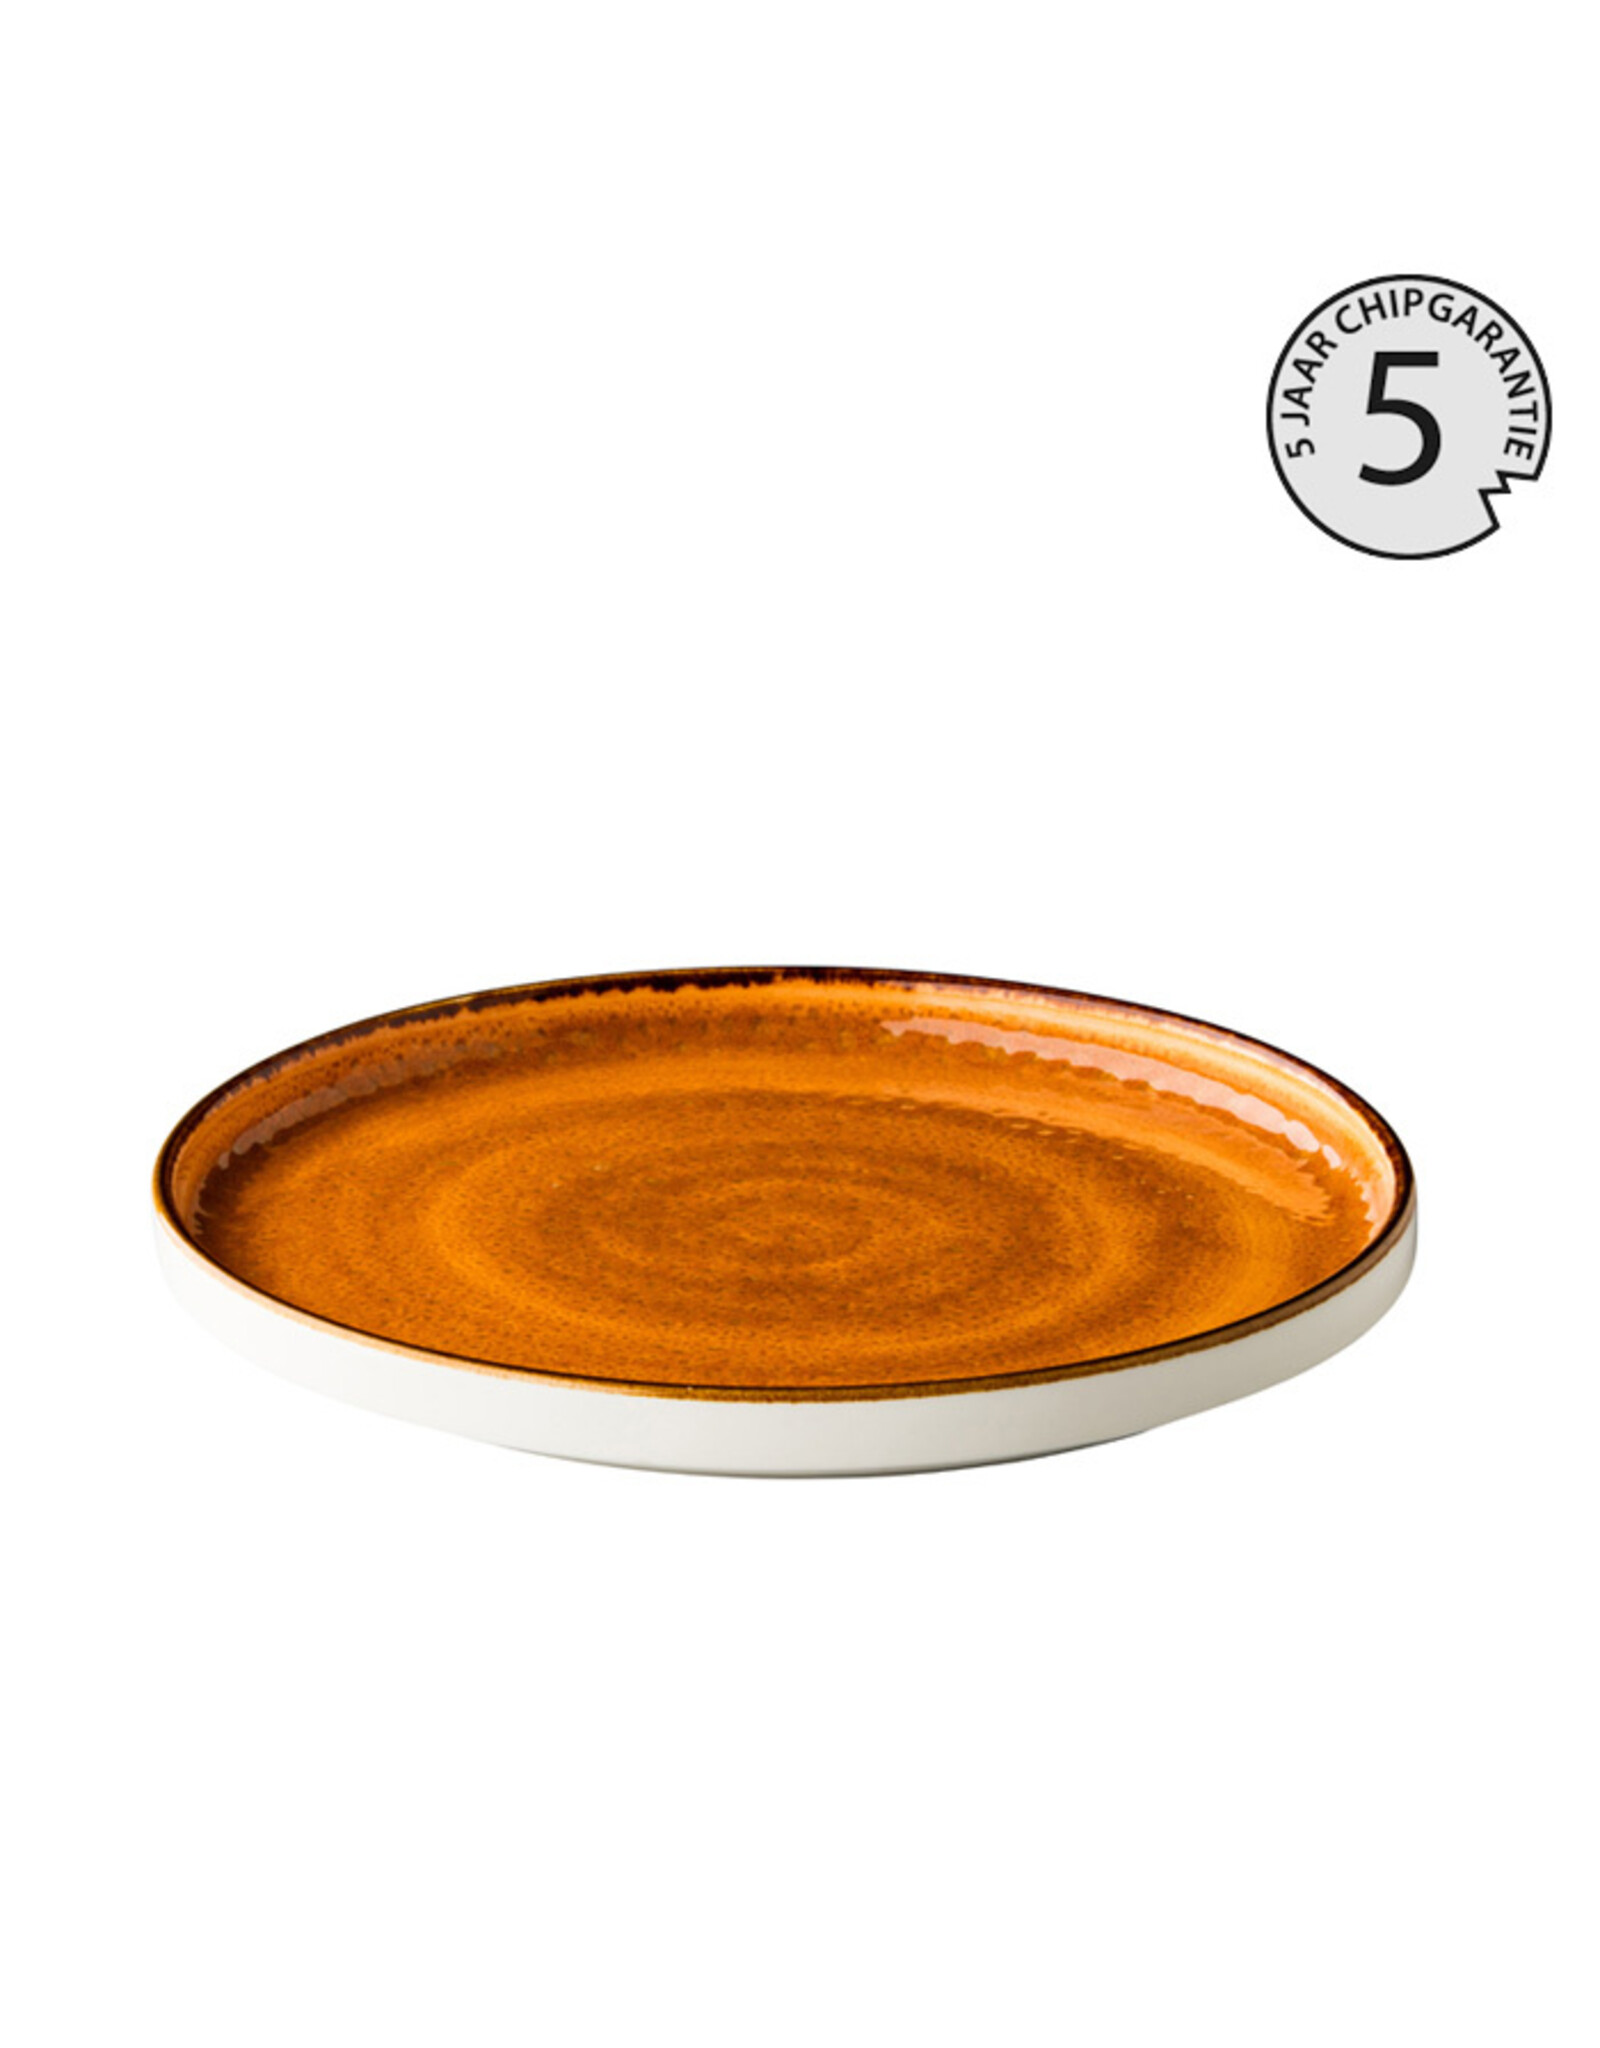 Stylepoint Jersey round plate raised edge orange 25,4 cm stackable  - 5 year chip warranty